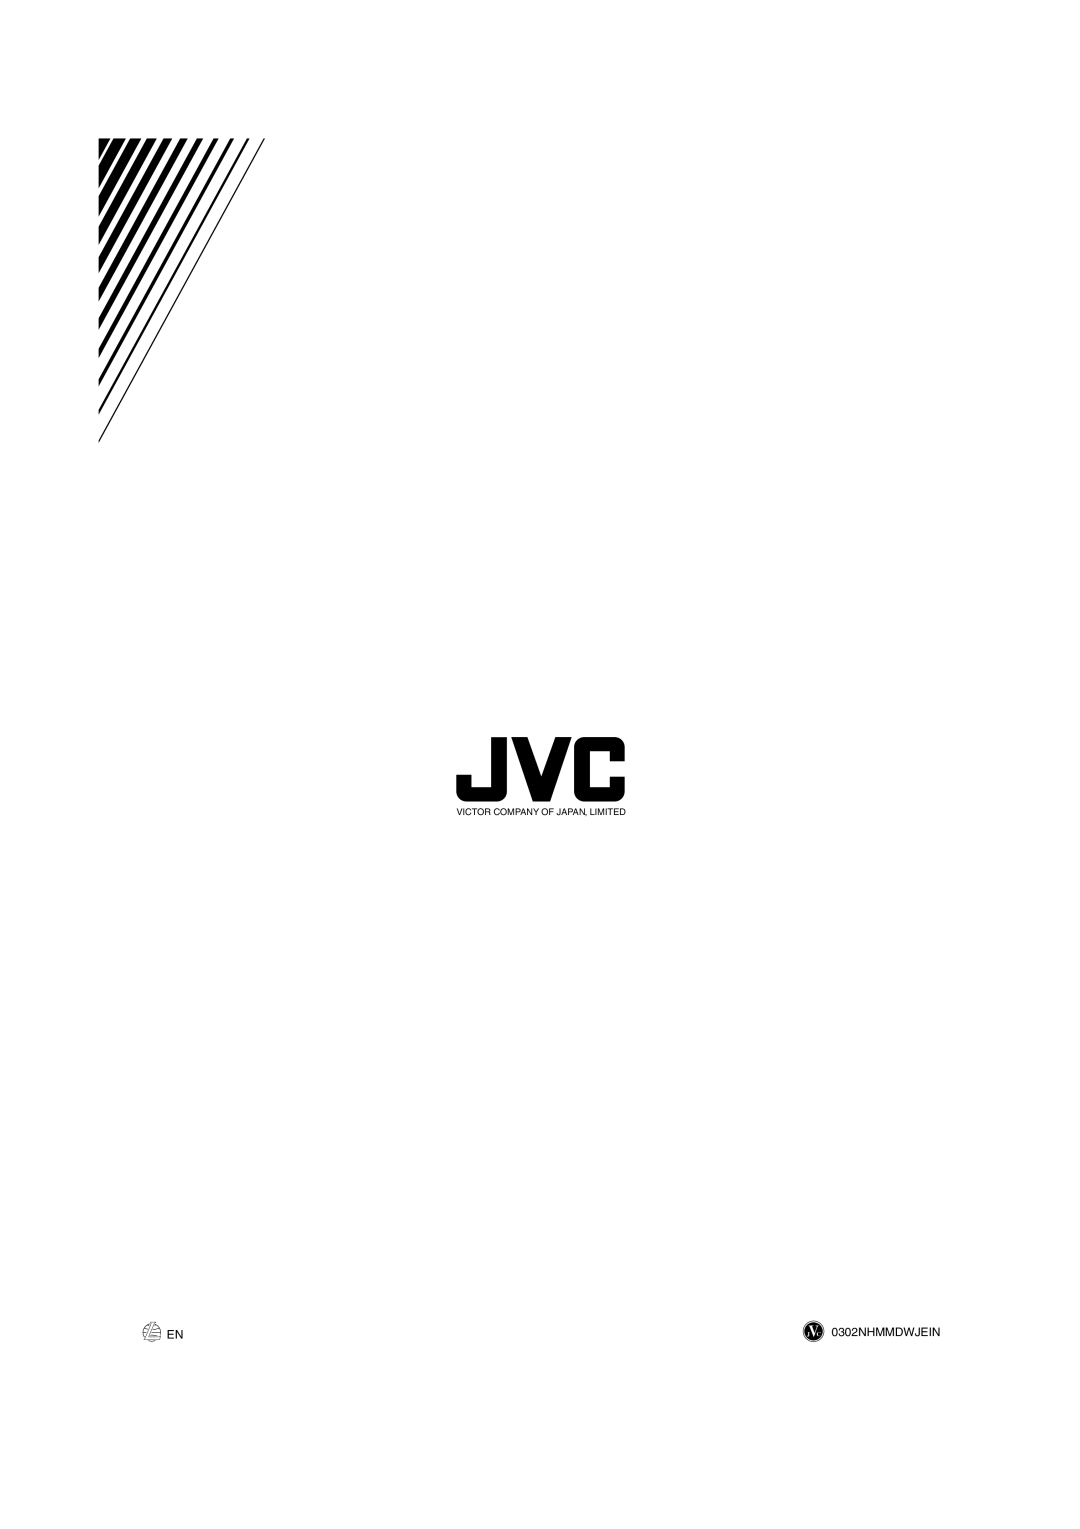 JVC RX-8020VBK manual JVC 0302NHMMDWJEIN, Victor Company Of Japan, Limited 